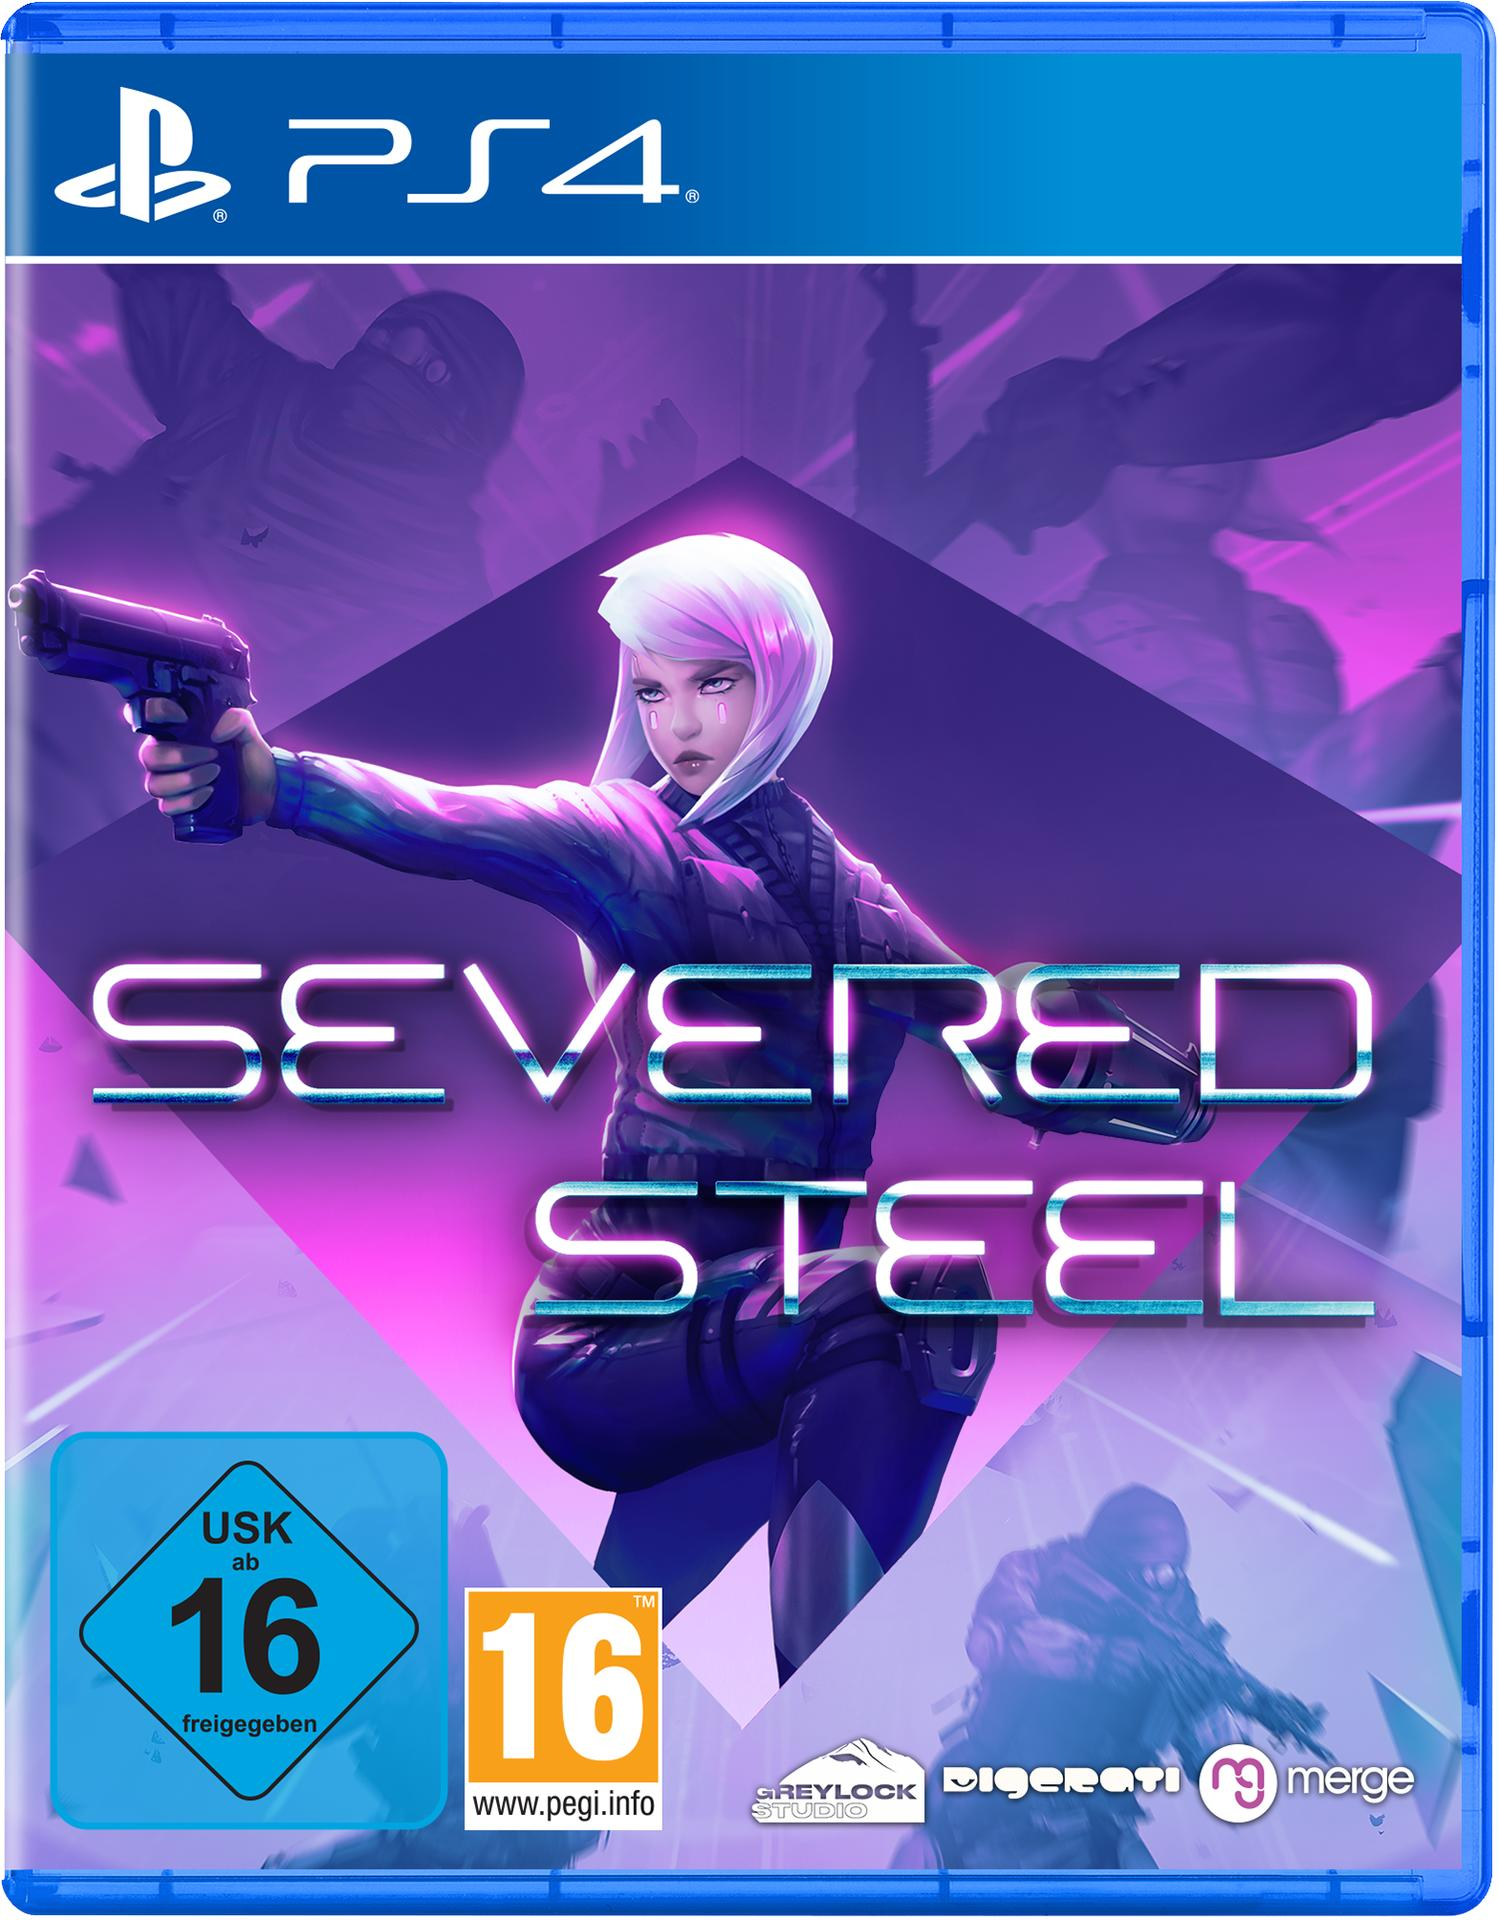 Steel [PlayStation - Severed 4]